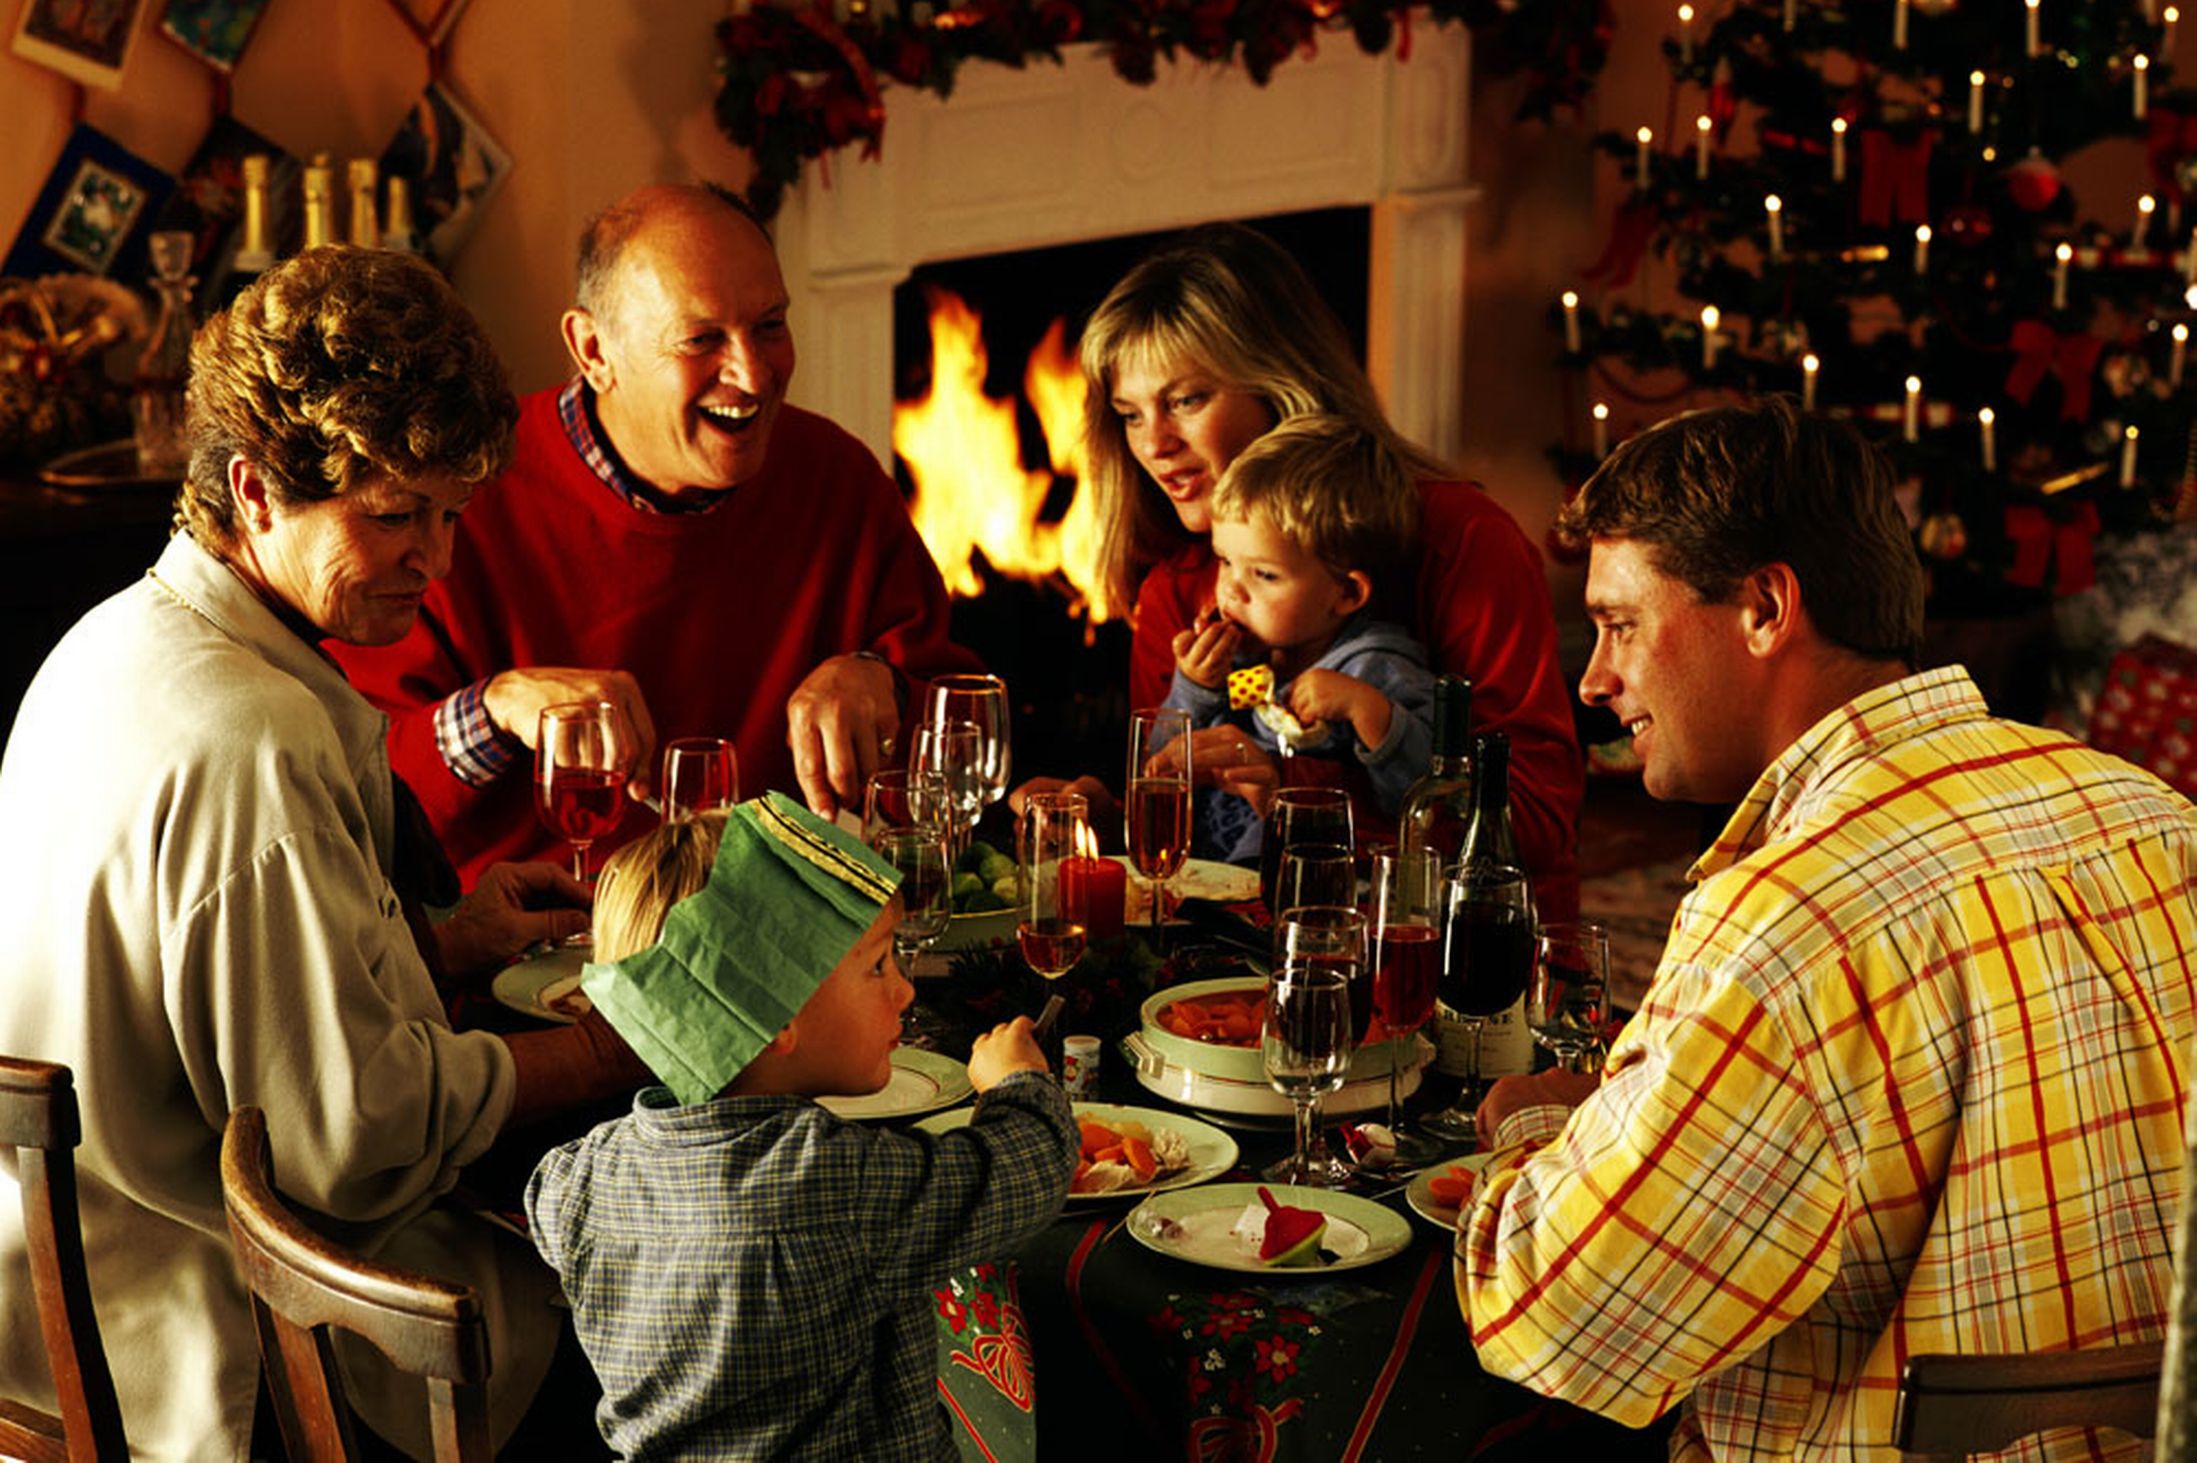 http://www.shellybeachgolfclub.com.au/wp-content/uploads/2014/11/Family-eating-Christmas-dinner.jpg